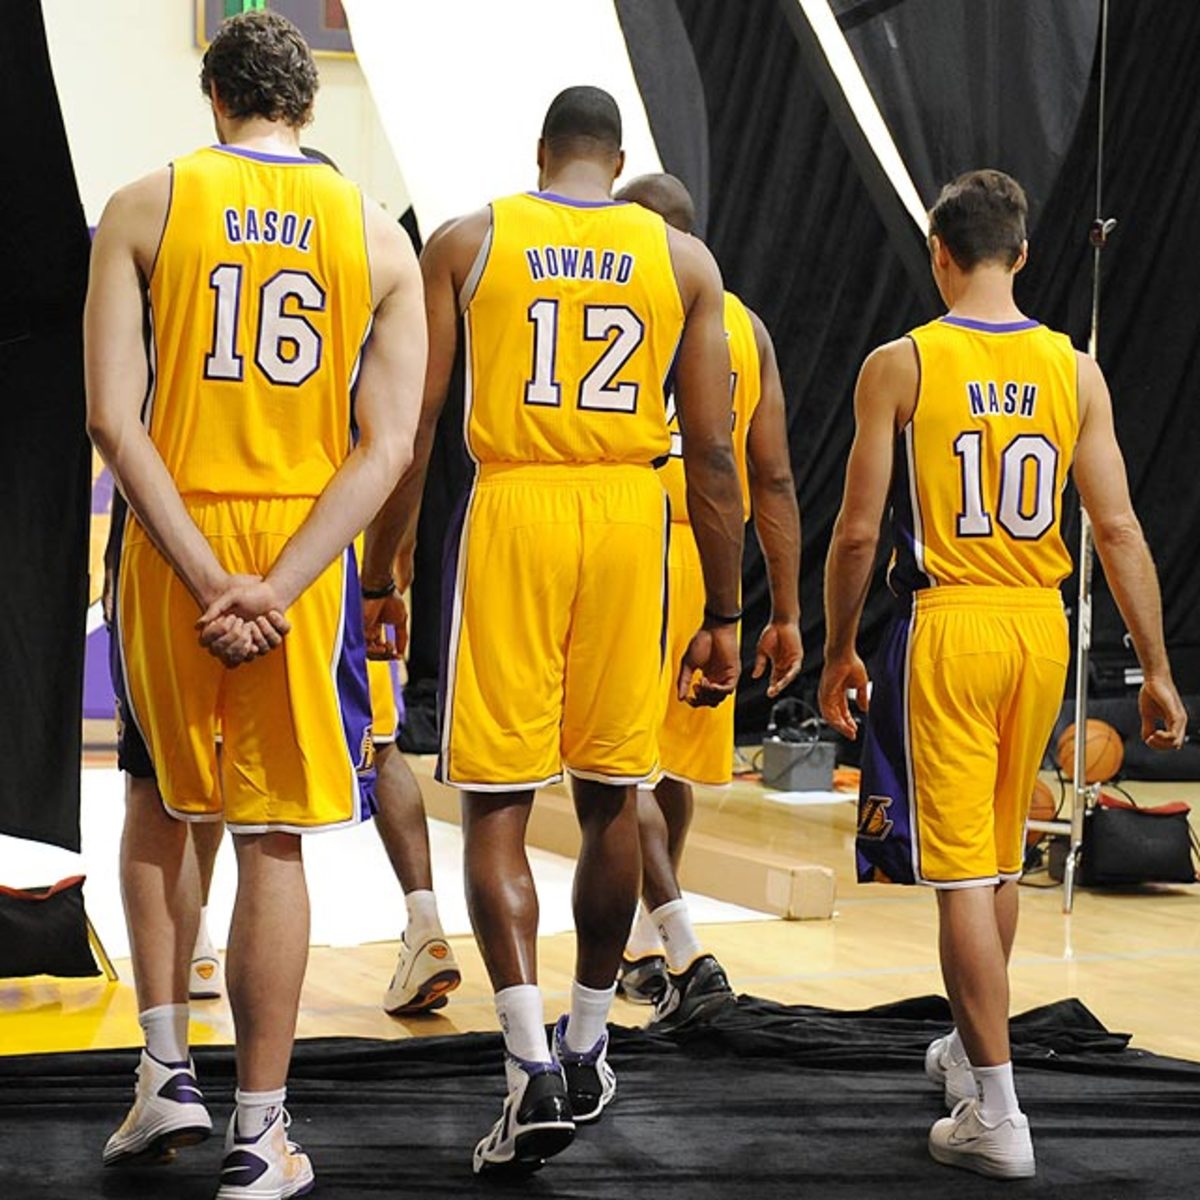 Lakers vs. Warriors